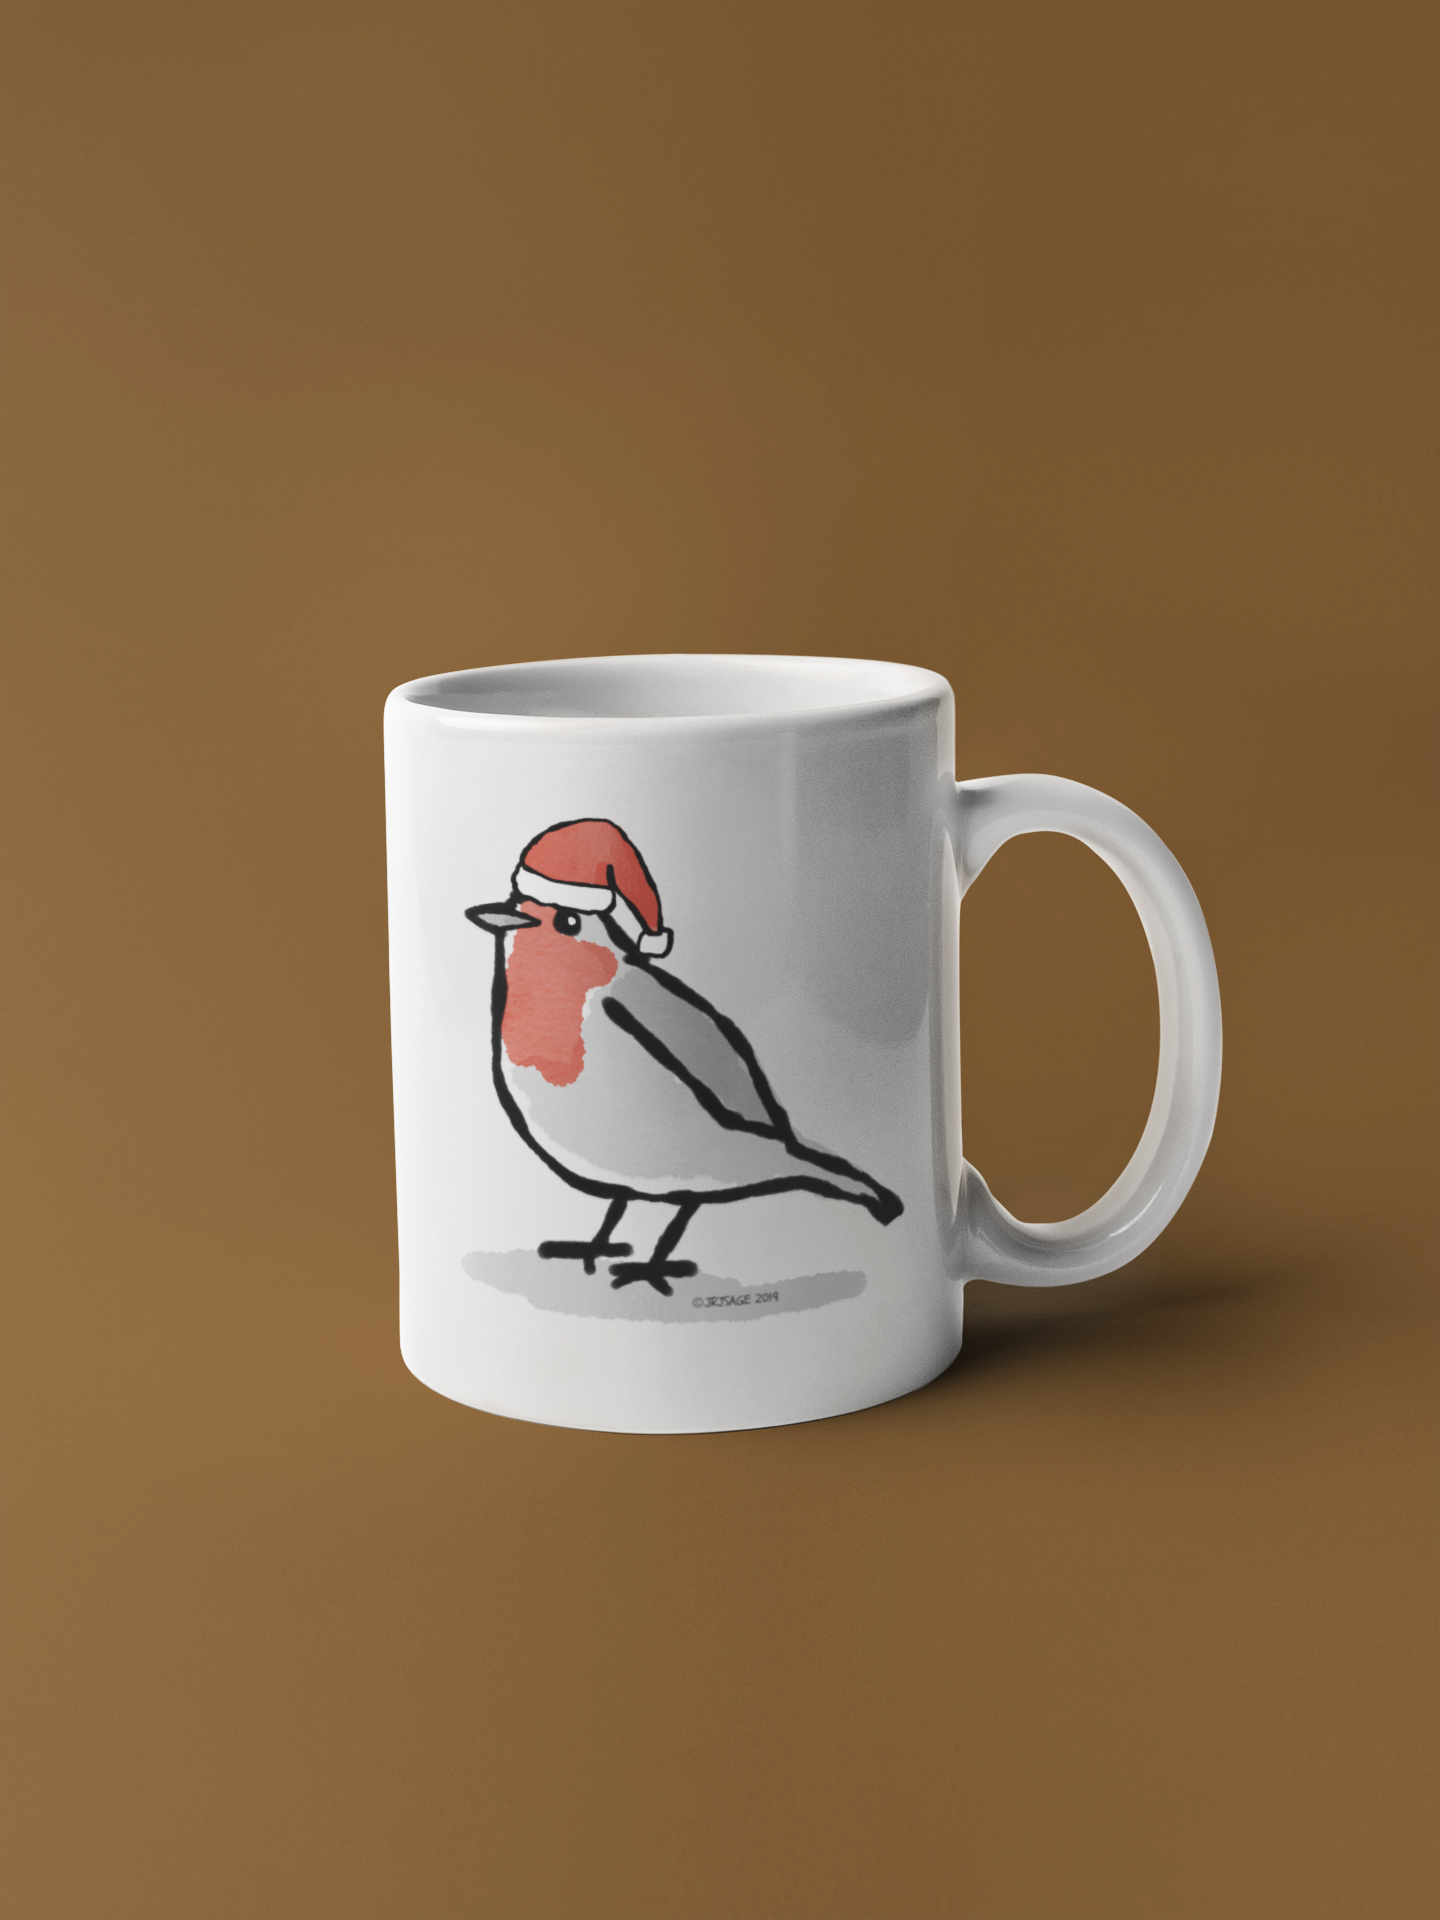 Santa Robin Christmas coffee mug design by Hector and Bone cute bird wearing an Xmas hat